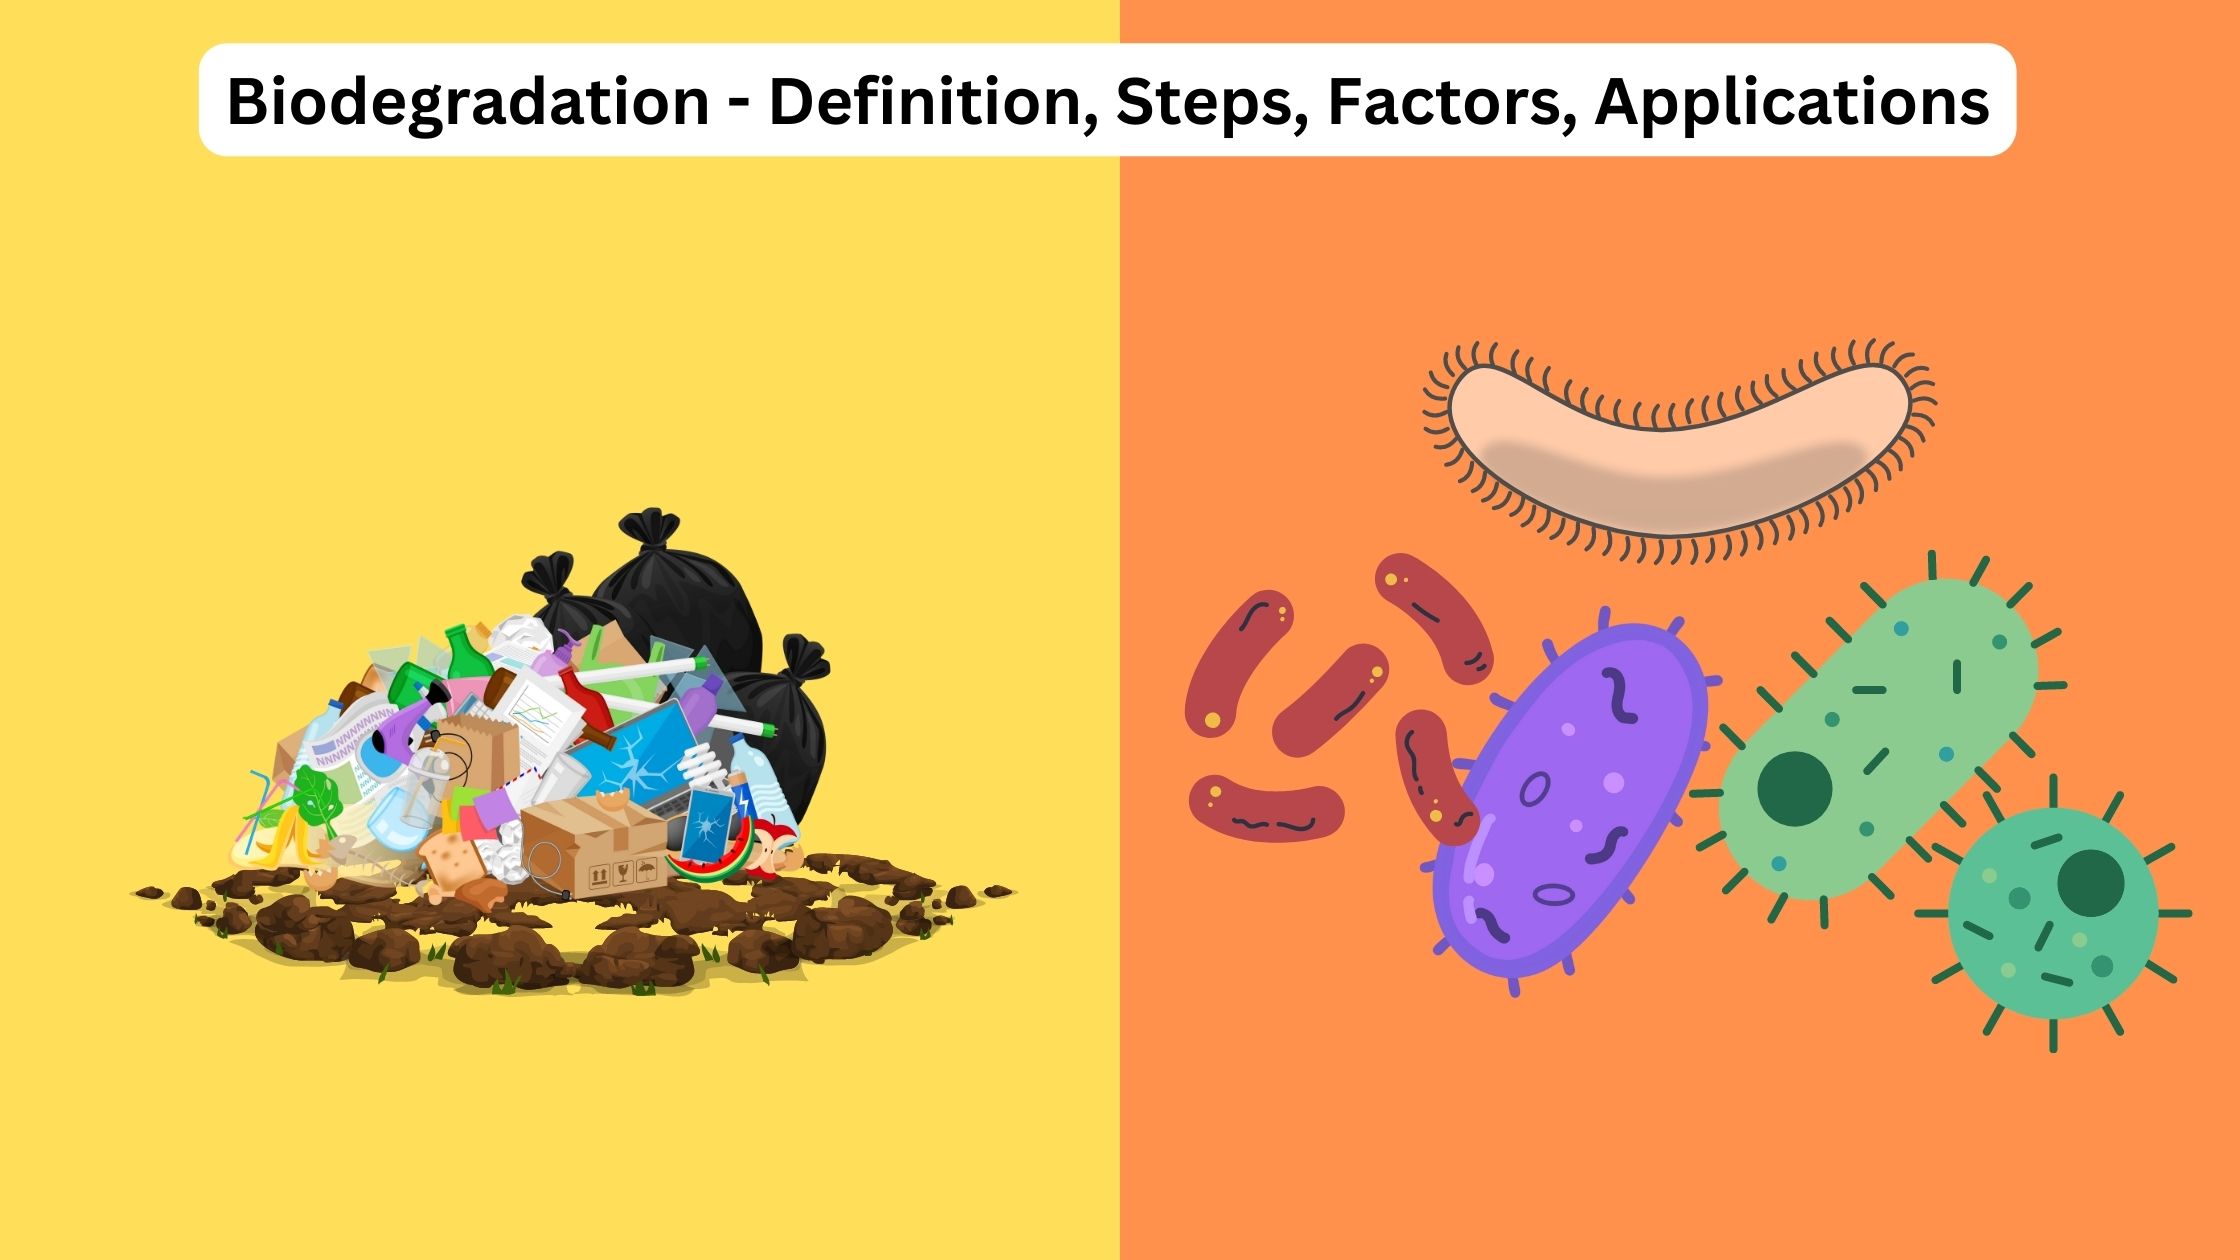 Biodegradation - Definition, Steps, Factors, Applications